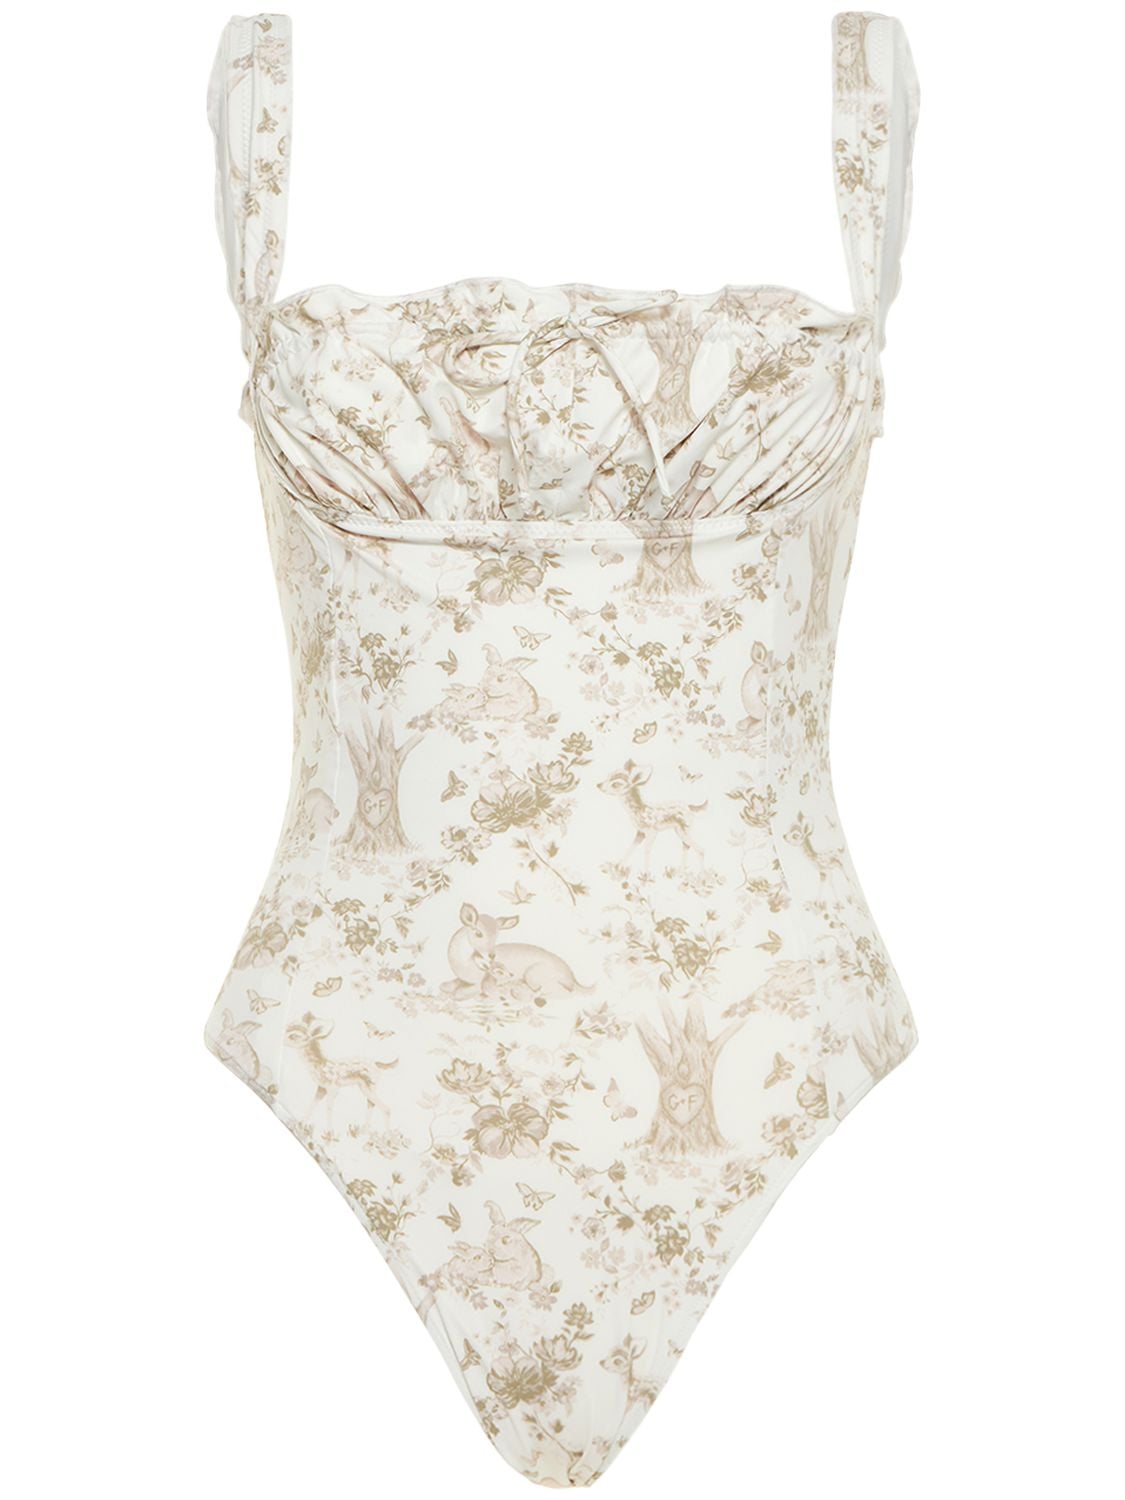 Frankies Bikini - Fawn printed one piece swimsuit - White/Beige ...